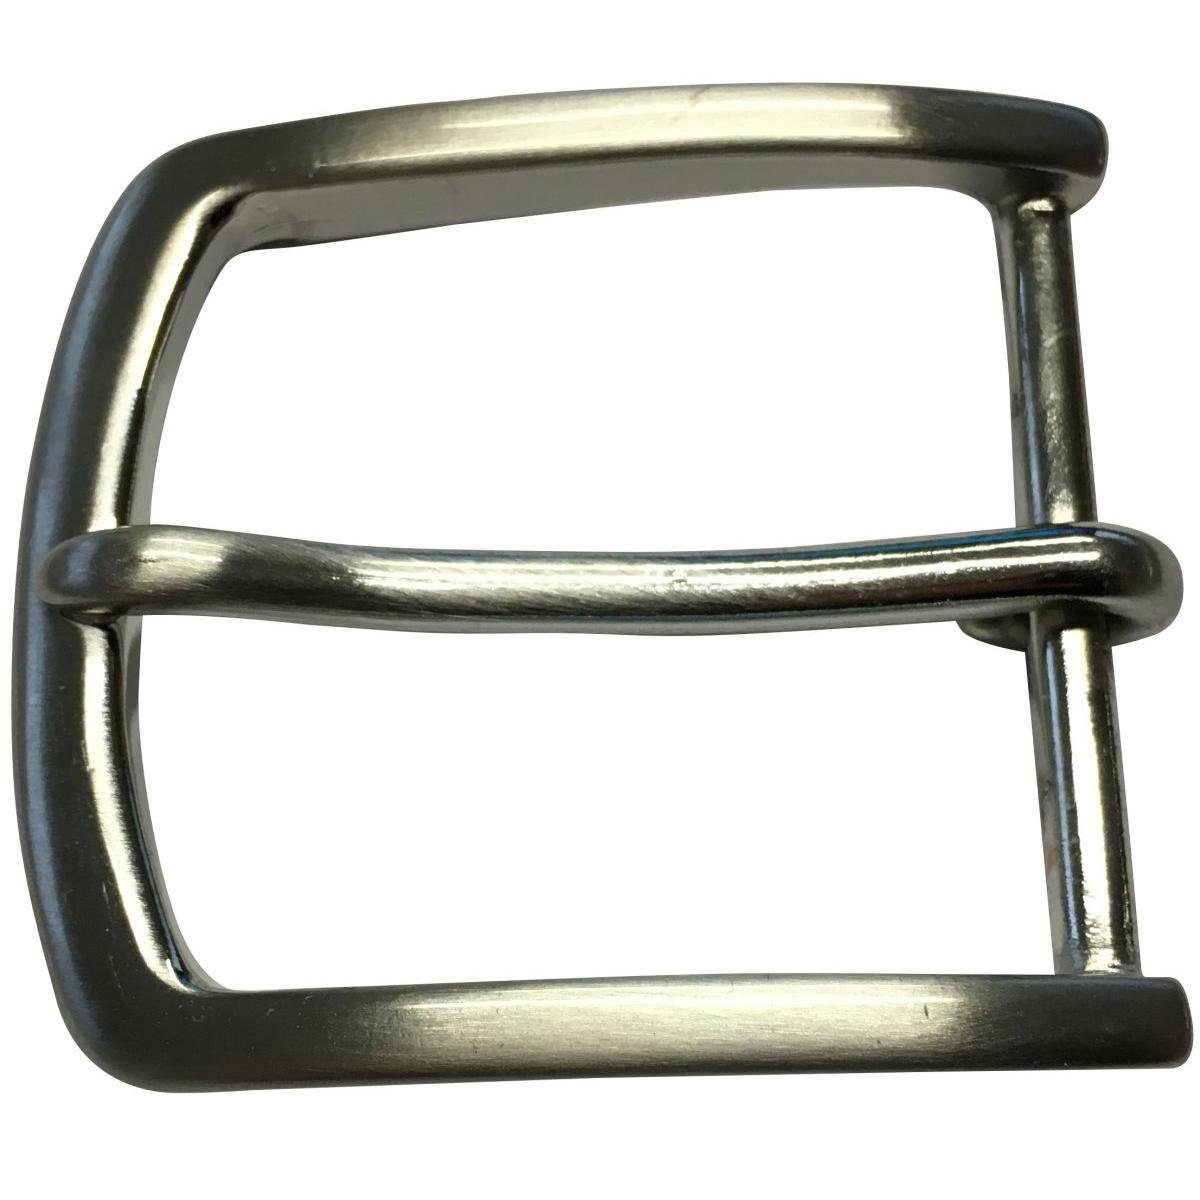 BELTINGER Gürtelschnalle 4,0 cm - Wechselschließe Gürtelschließe 40mm - Dorn-Schließe - Gürtel Silber